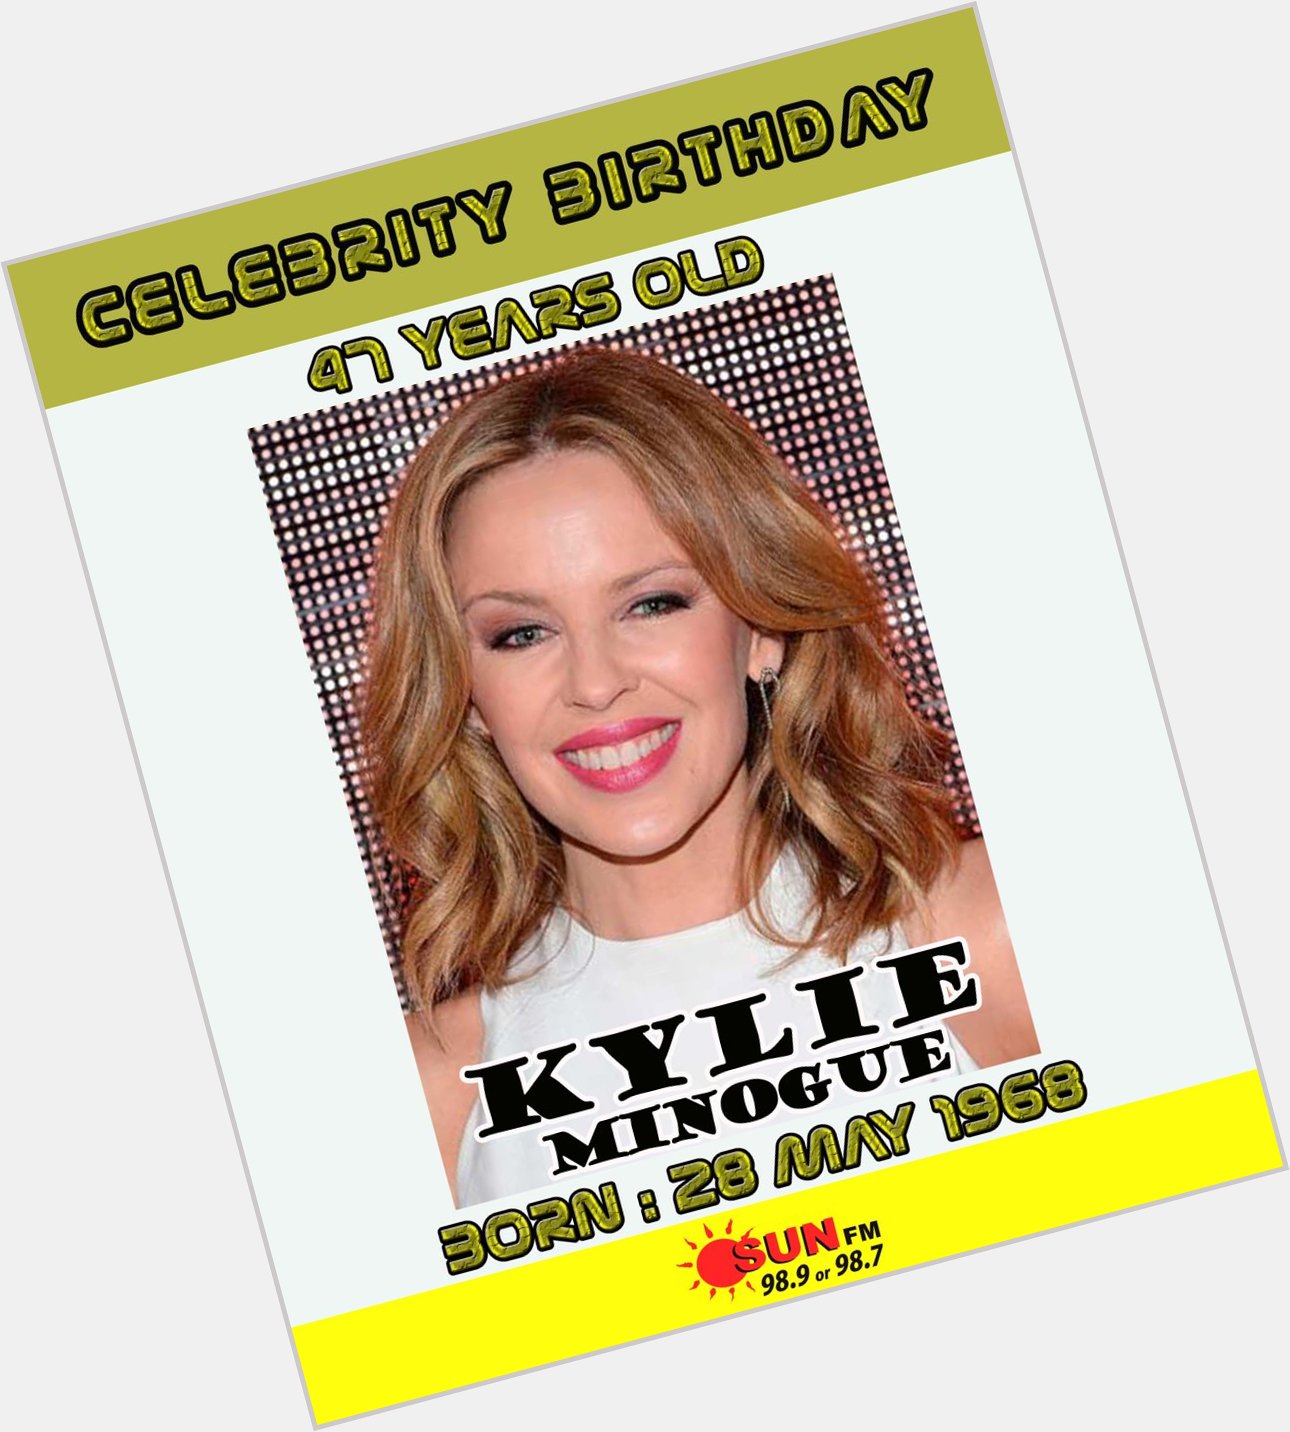 98.9 FM or 98.7 FM Islandwide.
____________________________

LIKE IT, LOVE IT & SHARE IT
Happy Birthday Kylie Minogue 